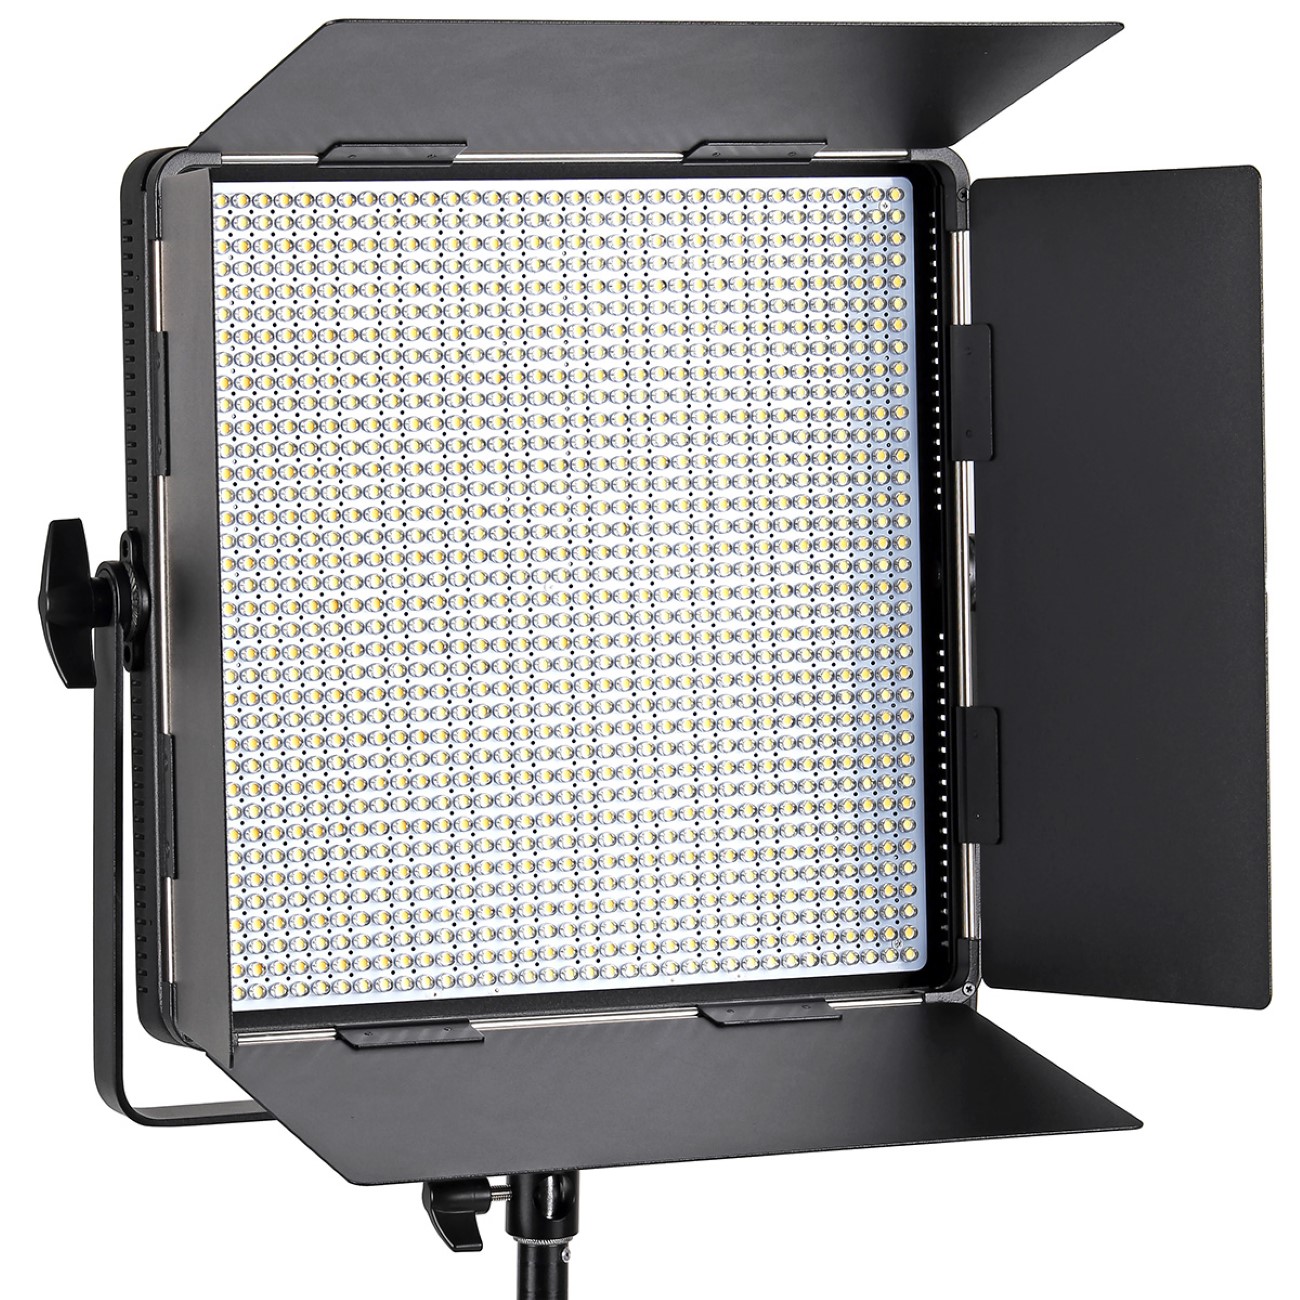 ayex Profi-Videoleuchte mit 1296 LEDs, DMX kompatibel, inklusive Funk-Fernbedienung